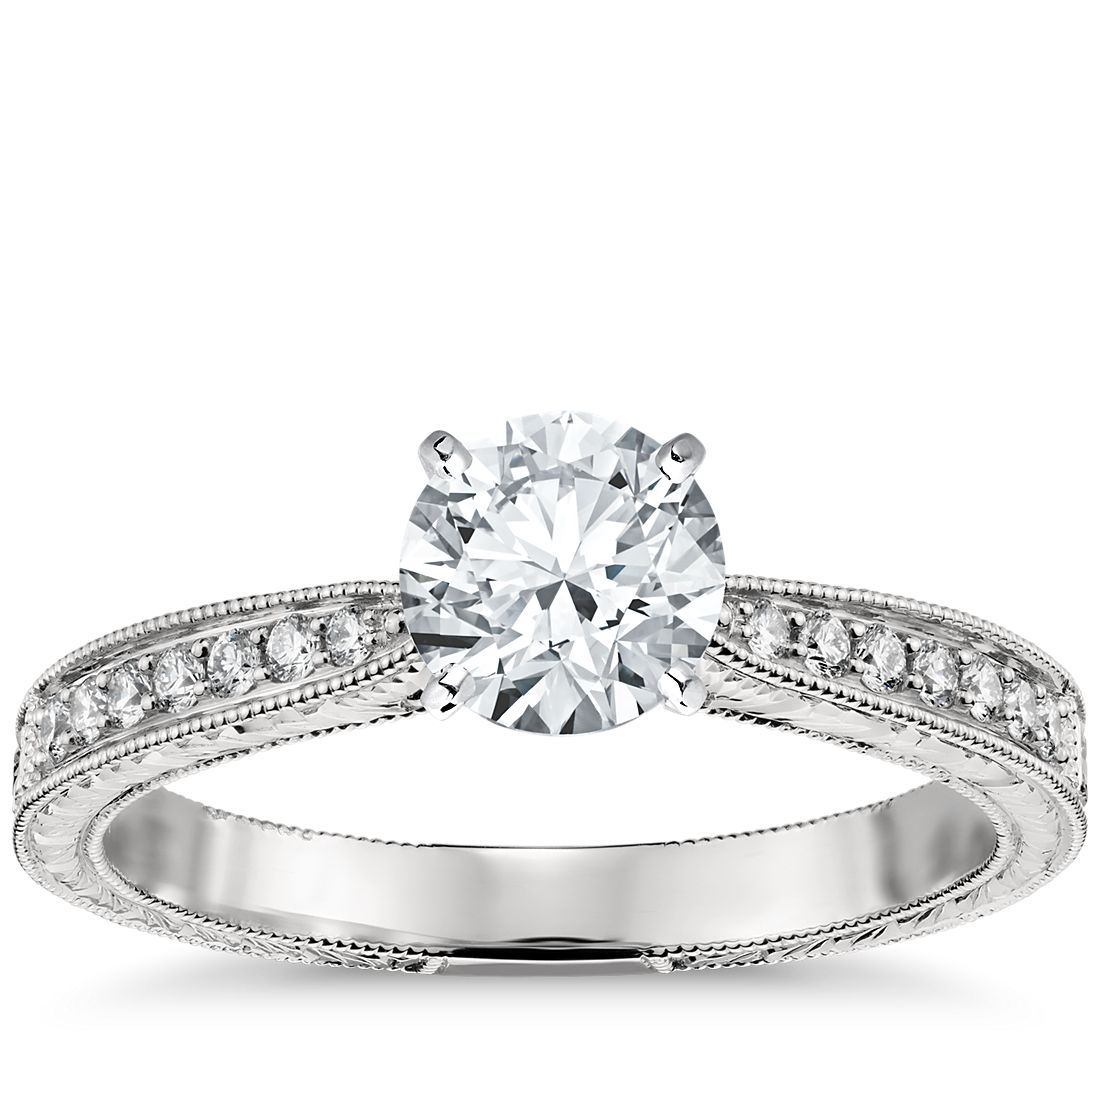 HandEngraved Micropavé Diamond Engagement Ring in Platinum (1/6 ct. tw